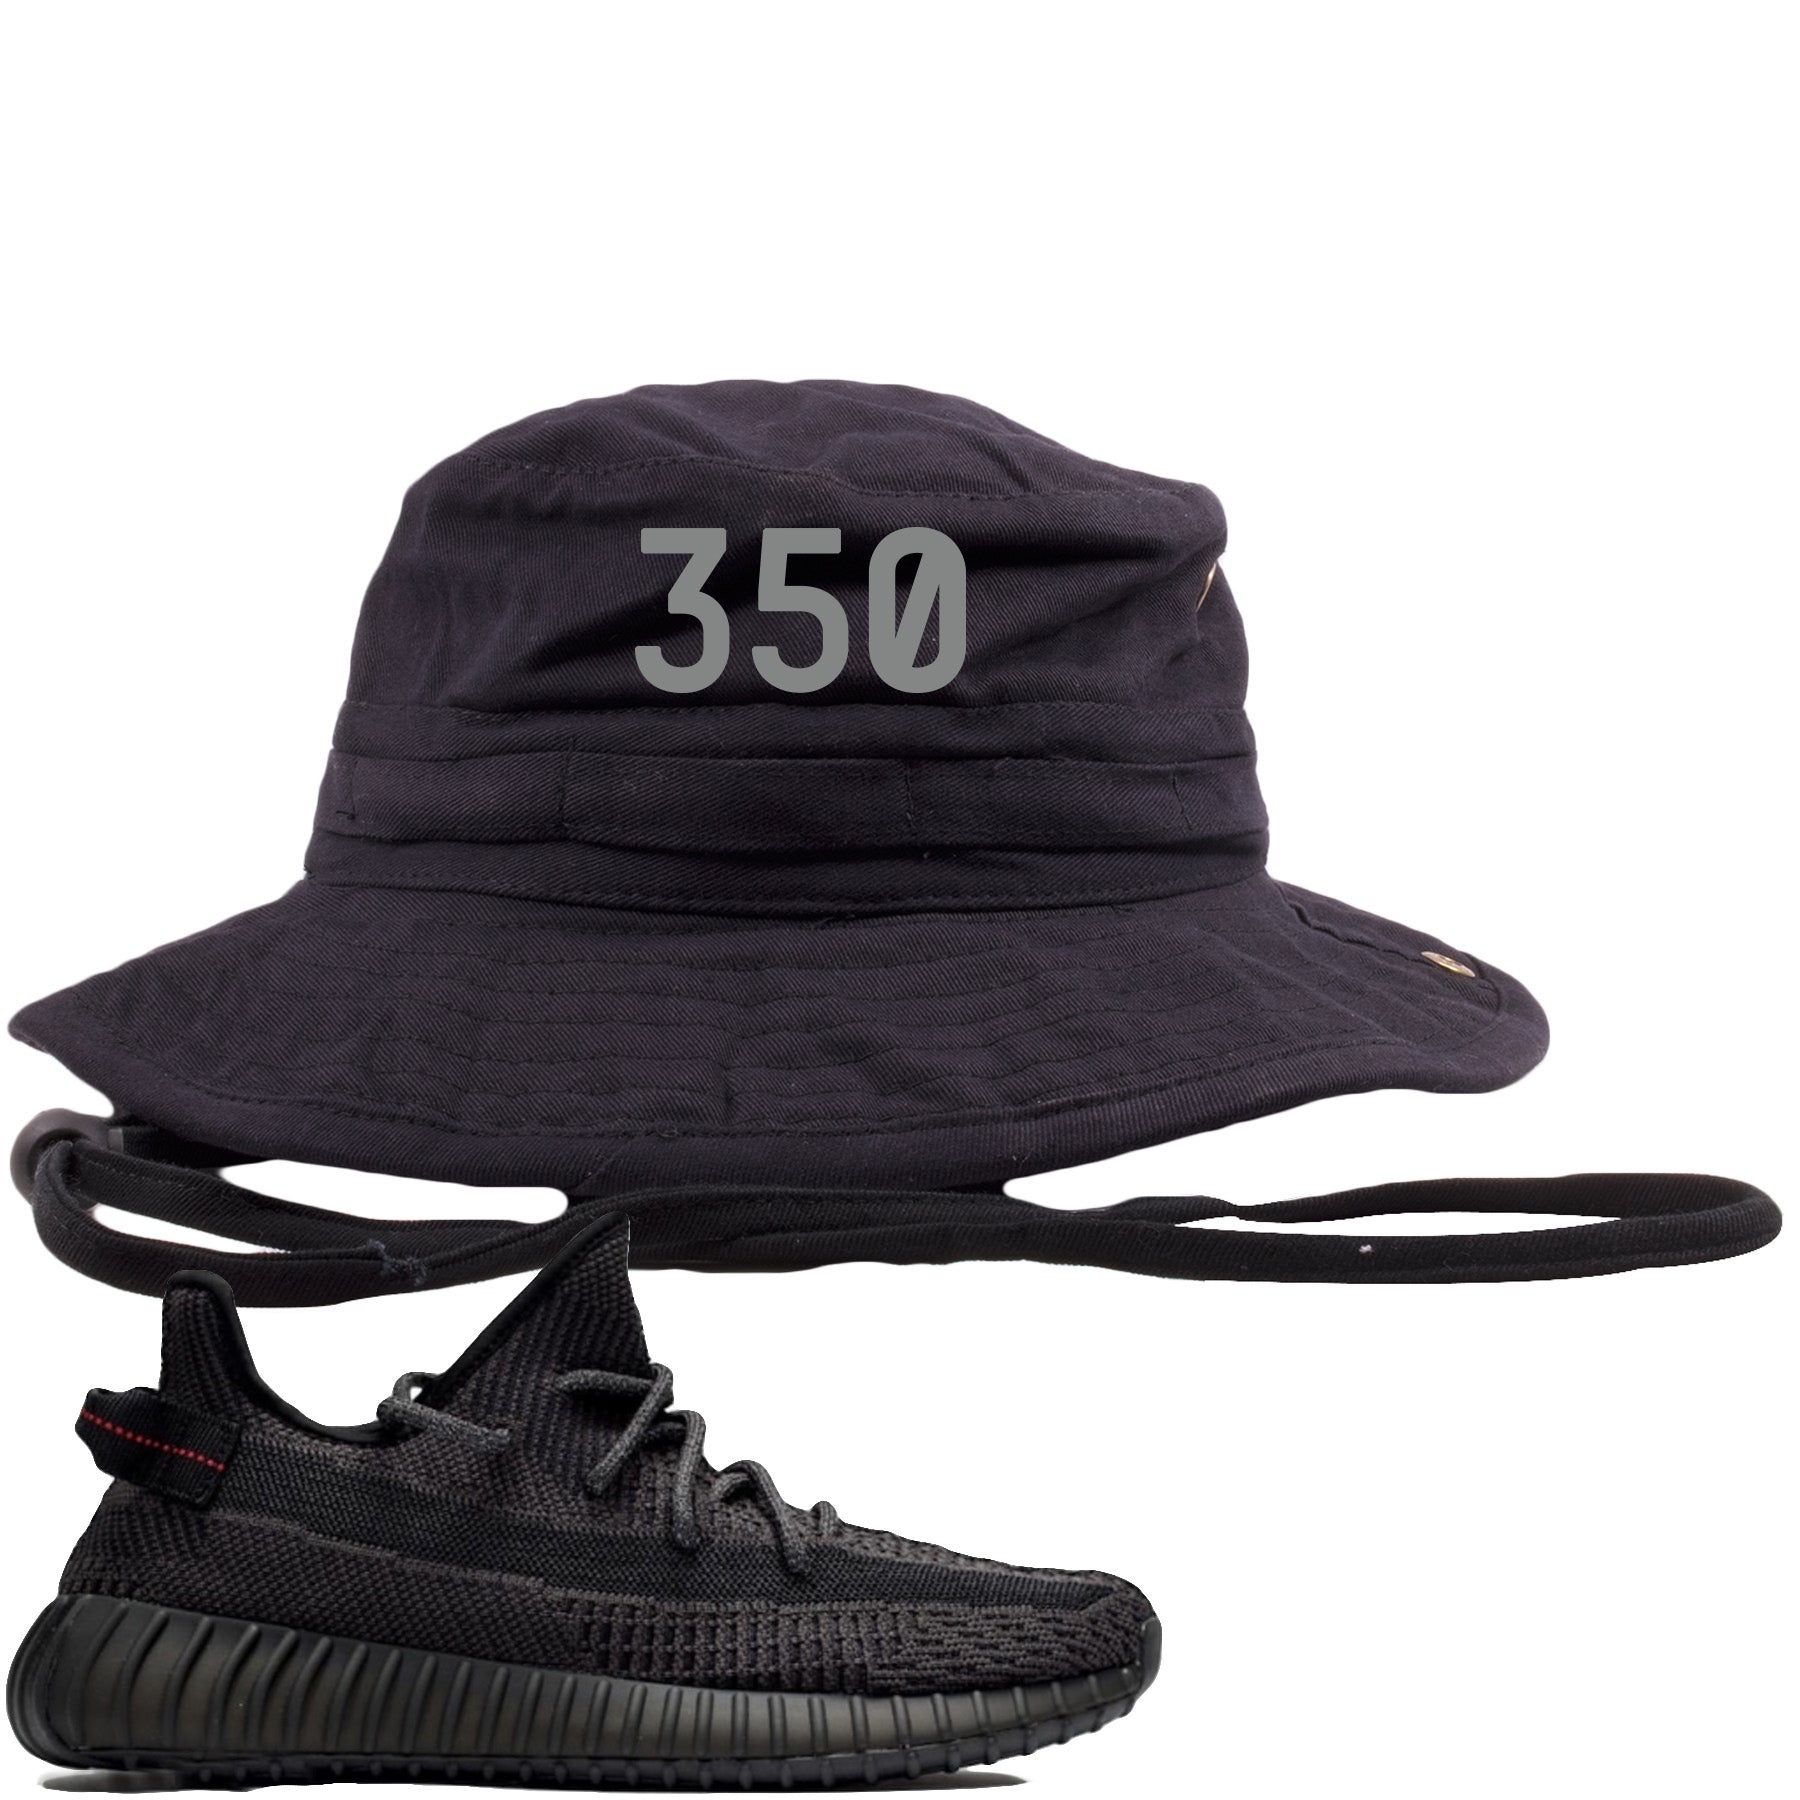 Adidas Yeezy Boost 350 v2 Black Sneaker Hook Up \